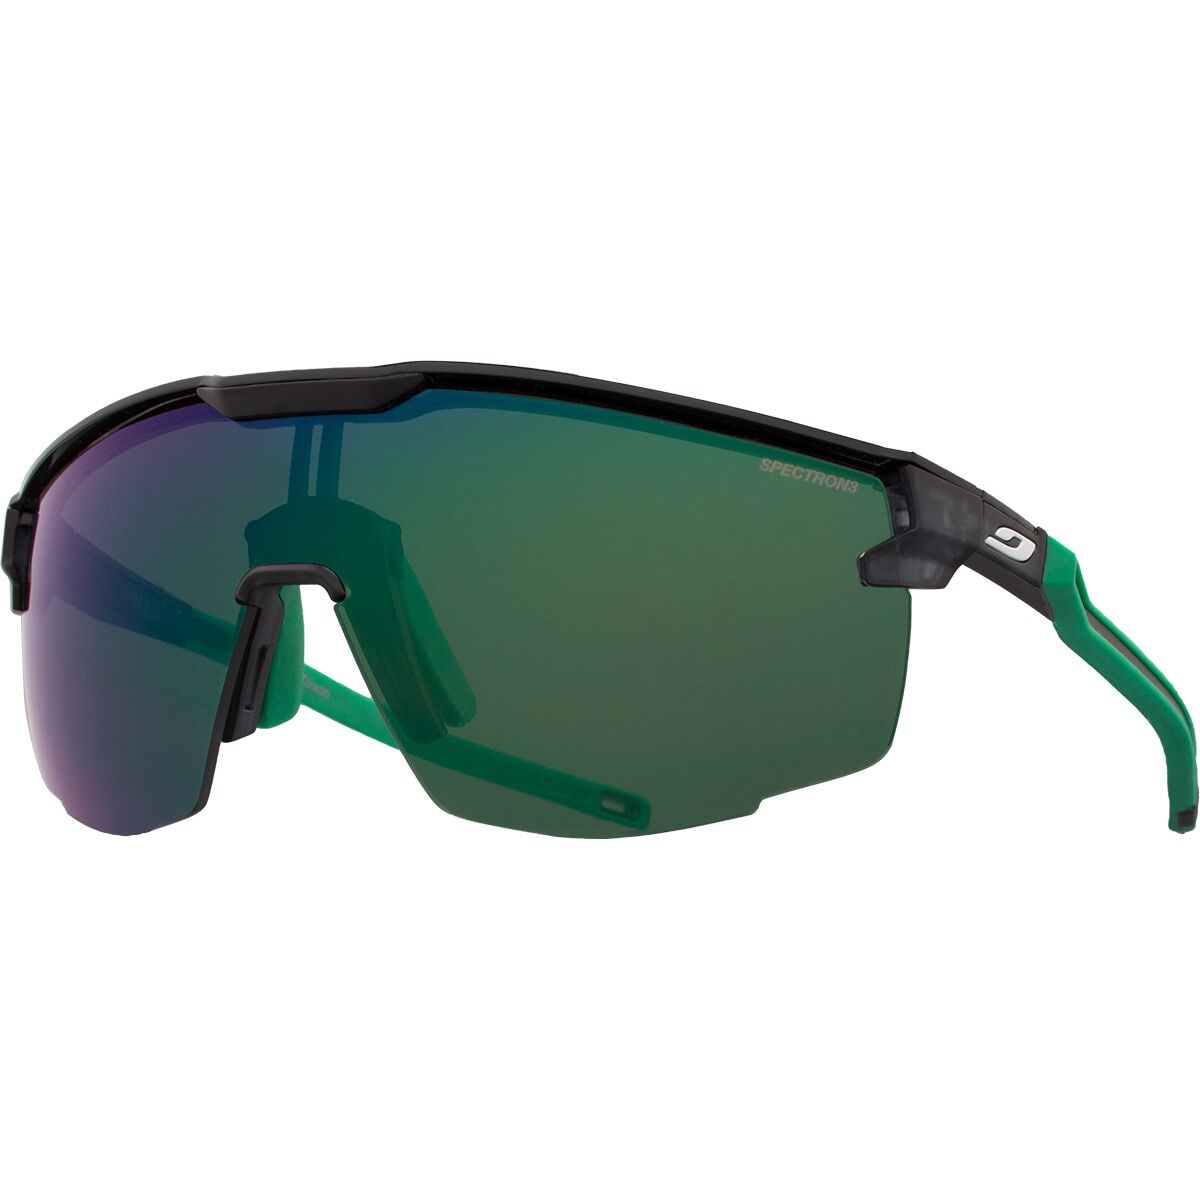 Julbo Ultimate Sunglasses Black/Green-Spectron 3, One Size - Men's